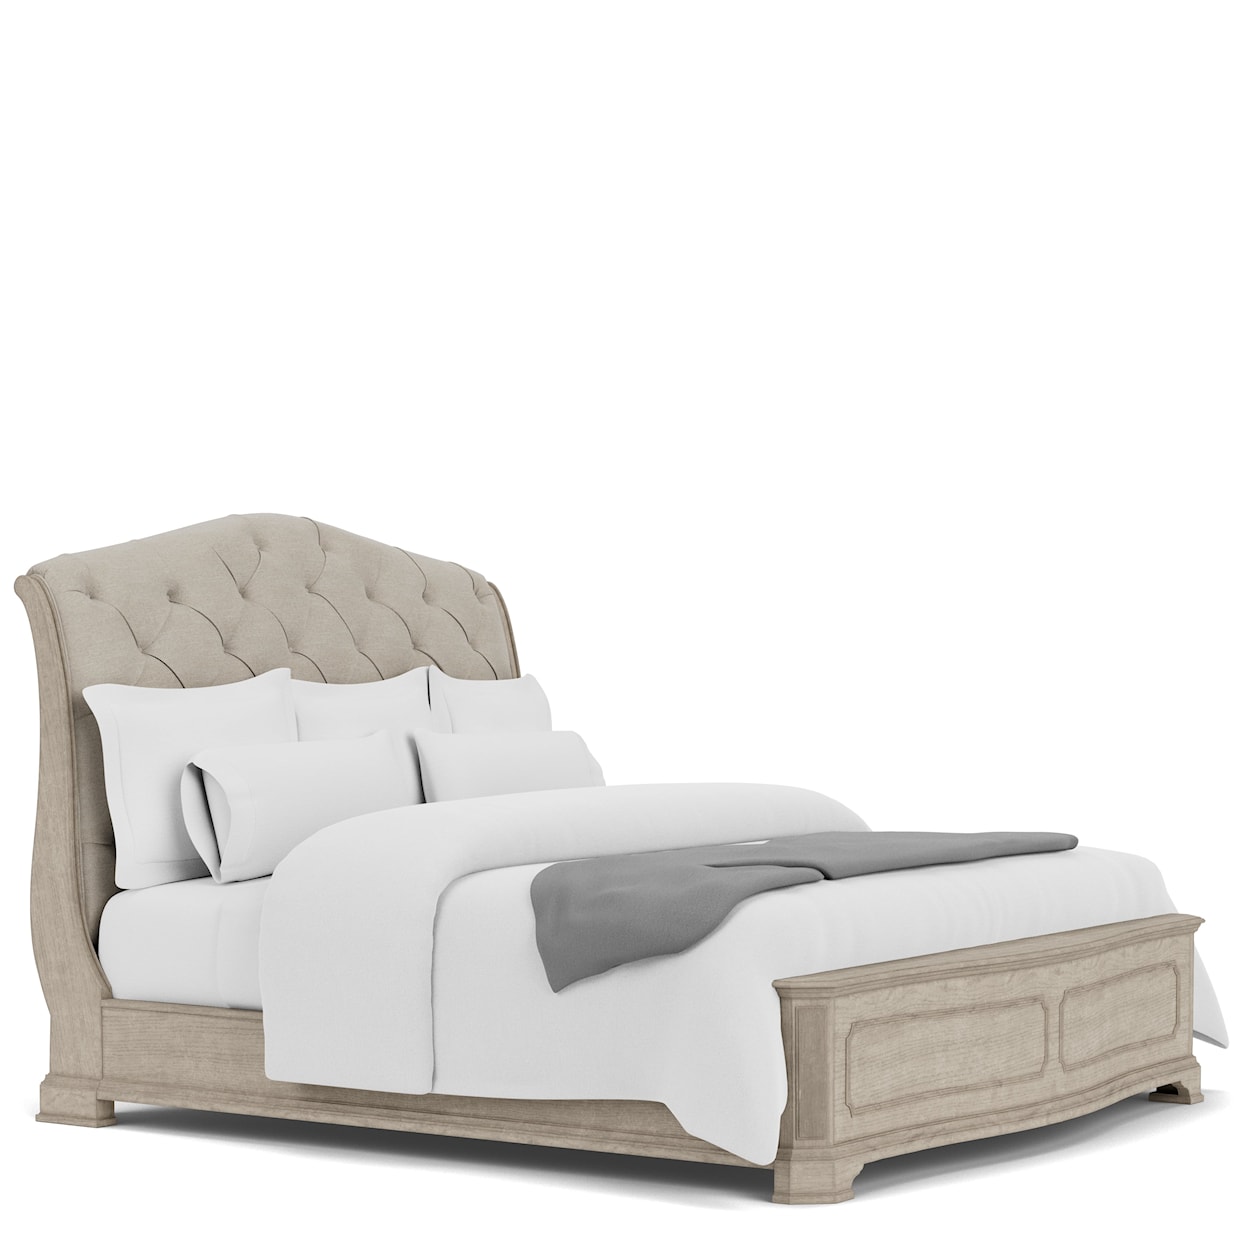 Riverside Furniture Kensington King Sleigh Bed with Upholstered Headboard